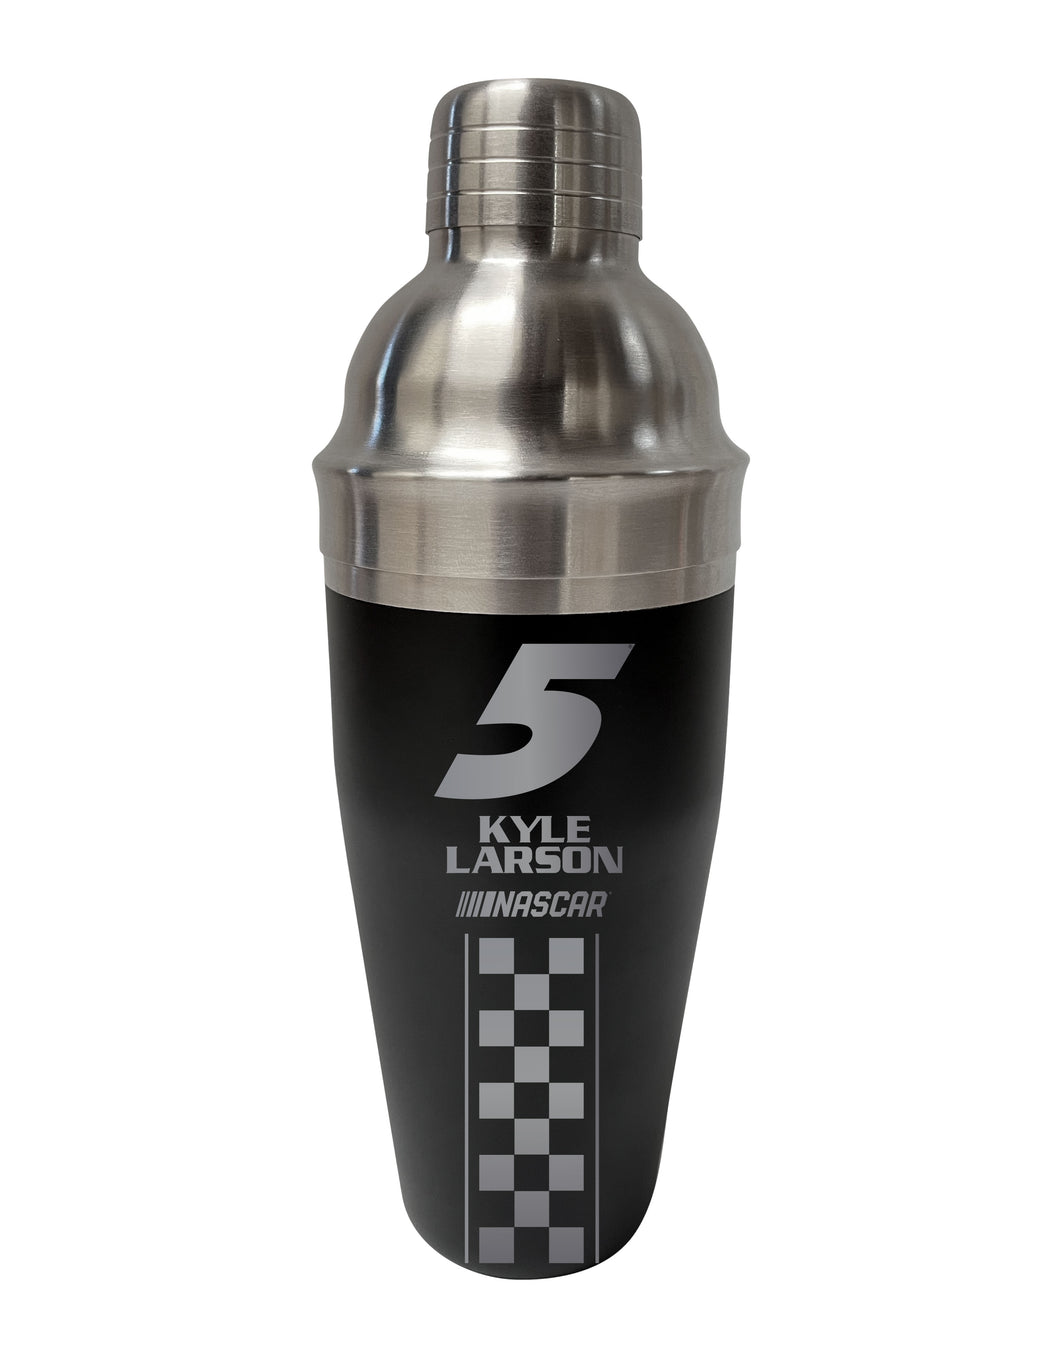 #5 Kyle Larson NASCAR Officially Licensed Cocktail Shaker